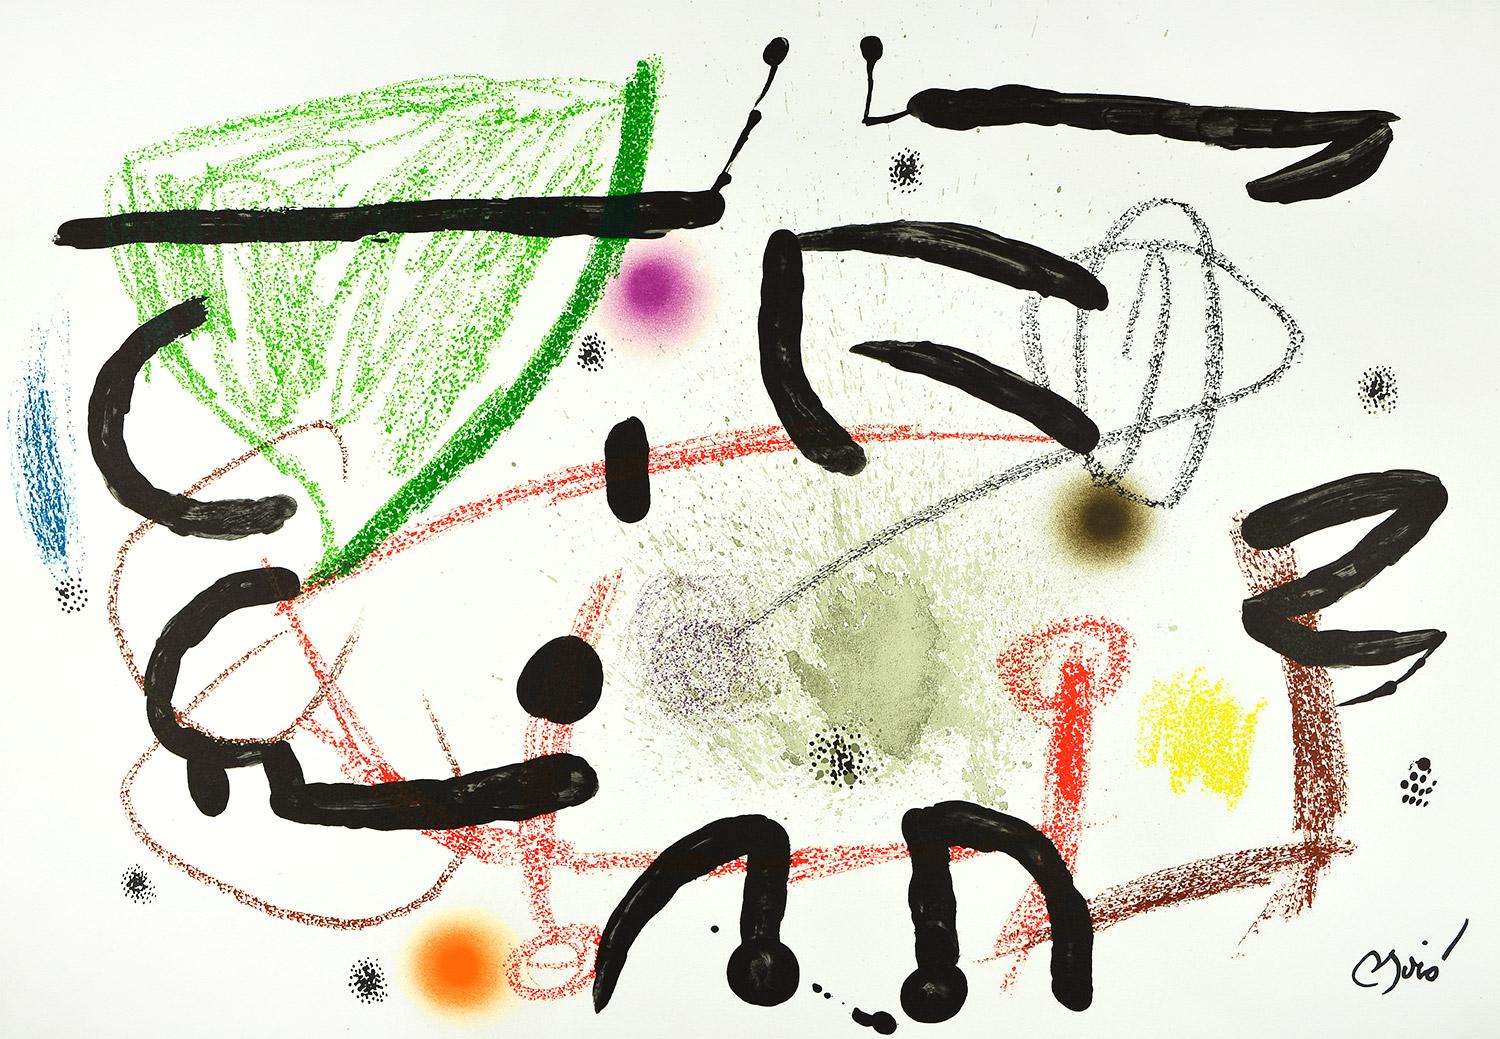 Joan Miró - Maravillas con variaciones acrósticas en el jardín de Miró XV
Date of creation: 1975
Medium: Lithograph on Gvarro paper
Edition: 1500
Size: 49,5 x 71 cm
Condition: In very good conditions and never framed
Observations:
Lithograph on